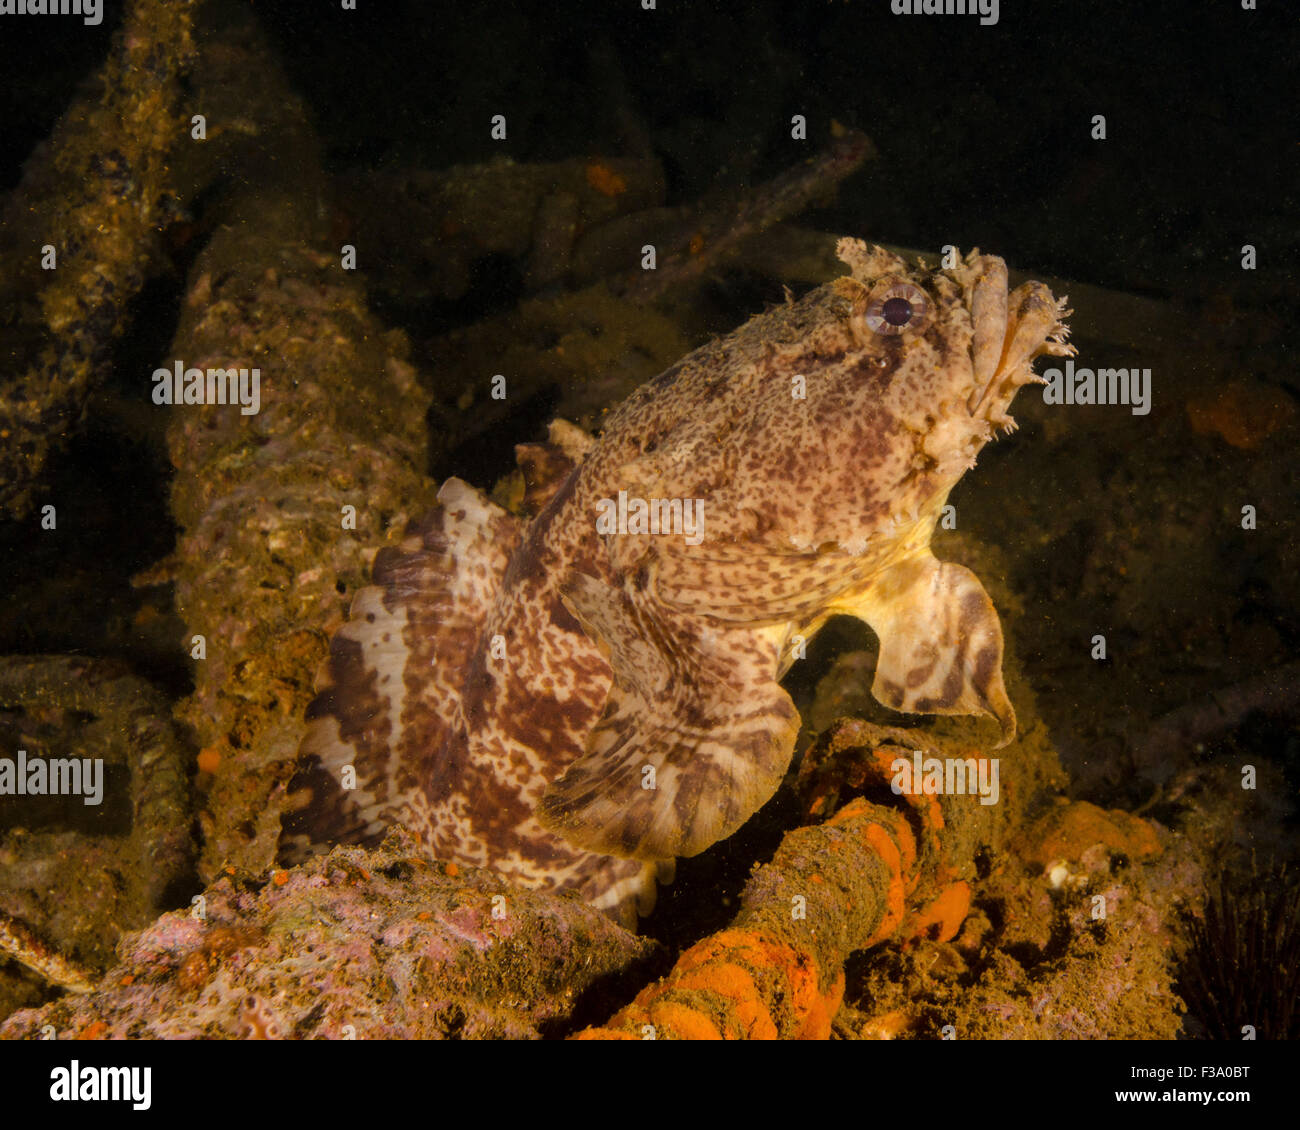 An oyster toadfish (Opsanus tau) sitting inside the USS Indra shipwreck off the coast of North Carolina. Stock Photo